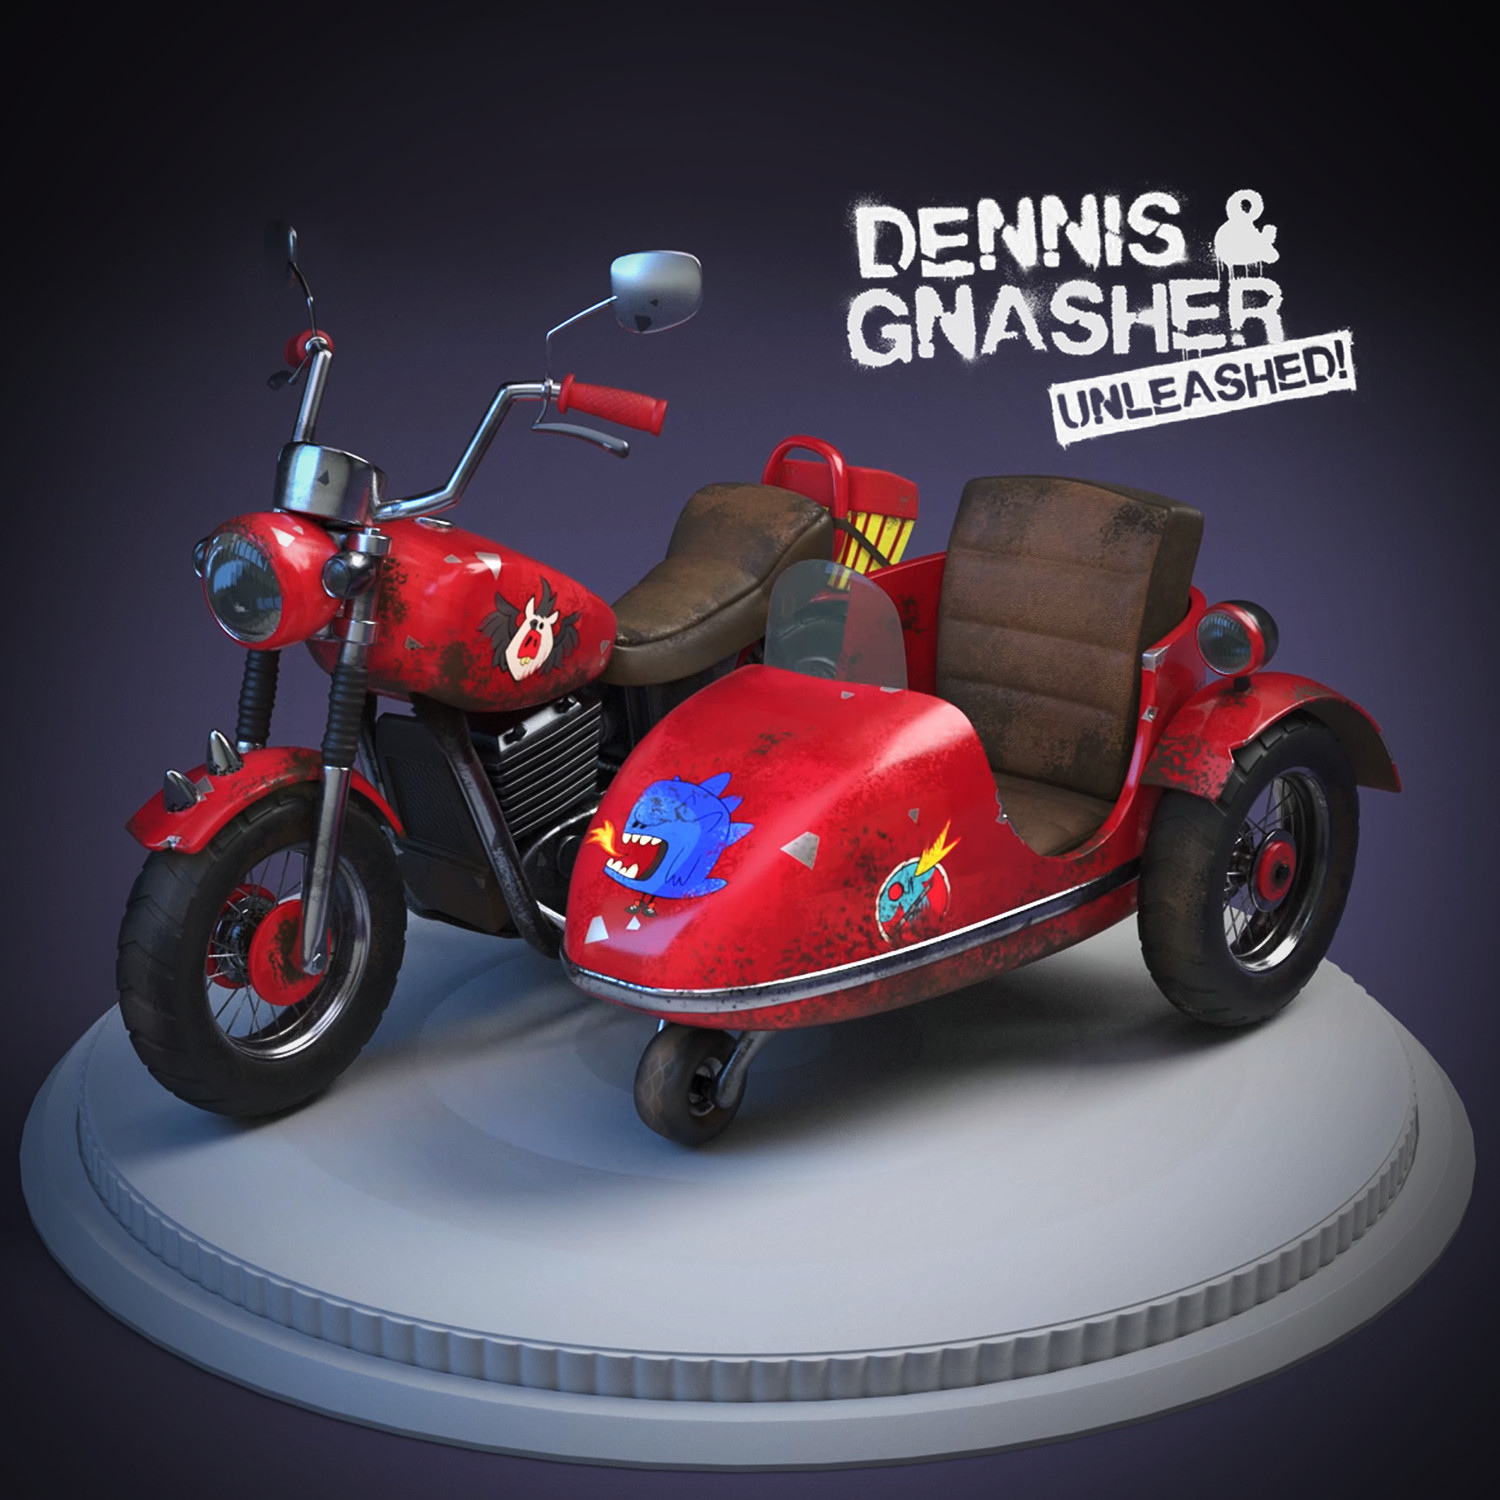 Dennis &amp; Gnasher Unleashed! - Gran's motorbike